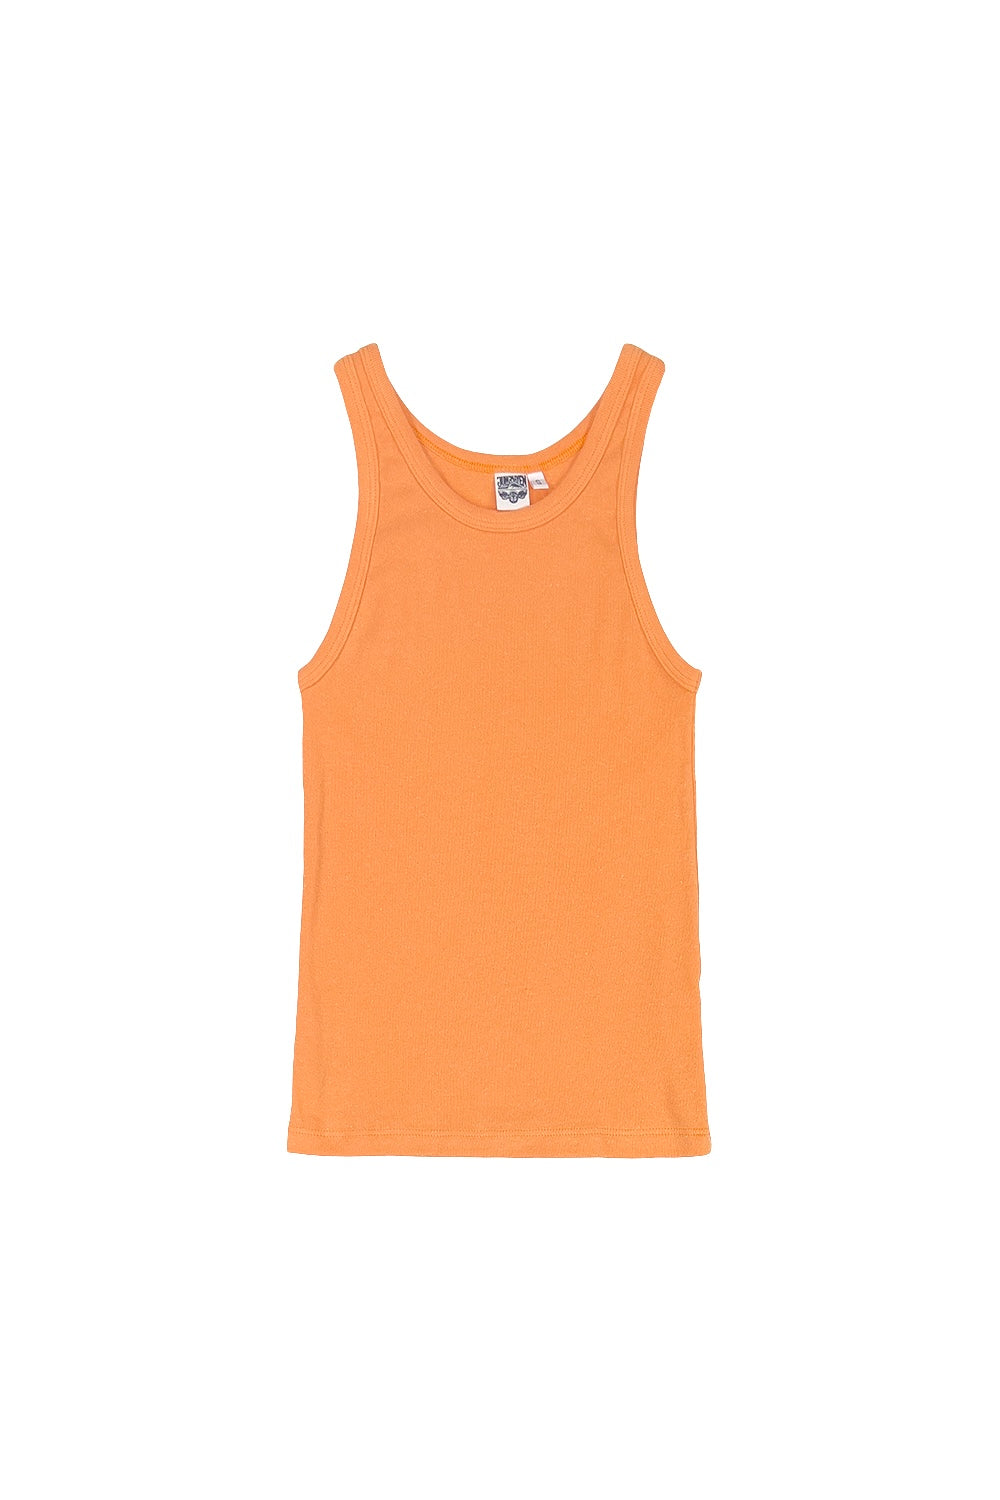 Alta Tank | Jungmaven Hemp Clothing & Accessories / Color: Apricot Crush